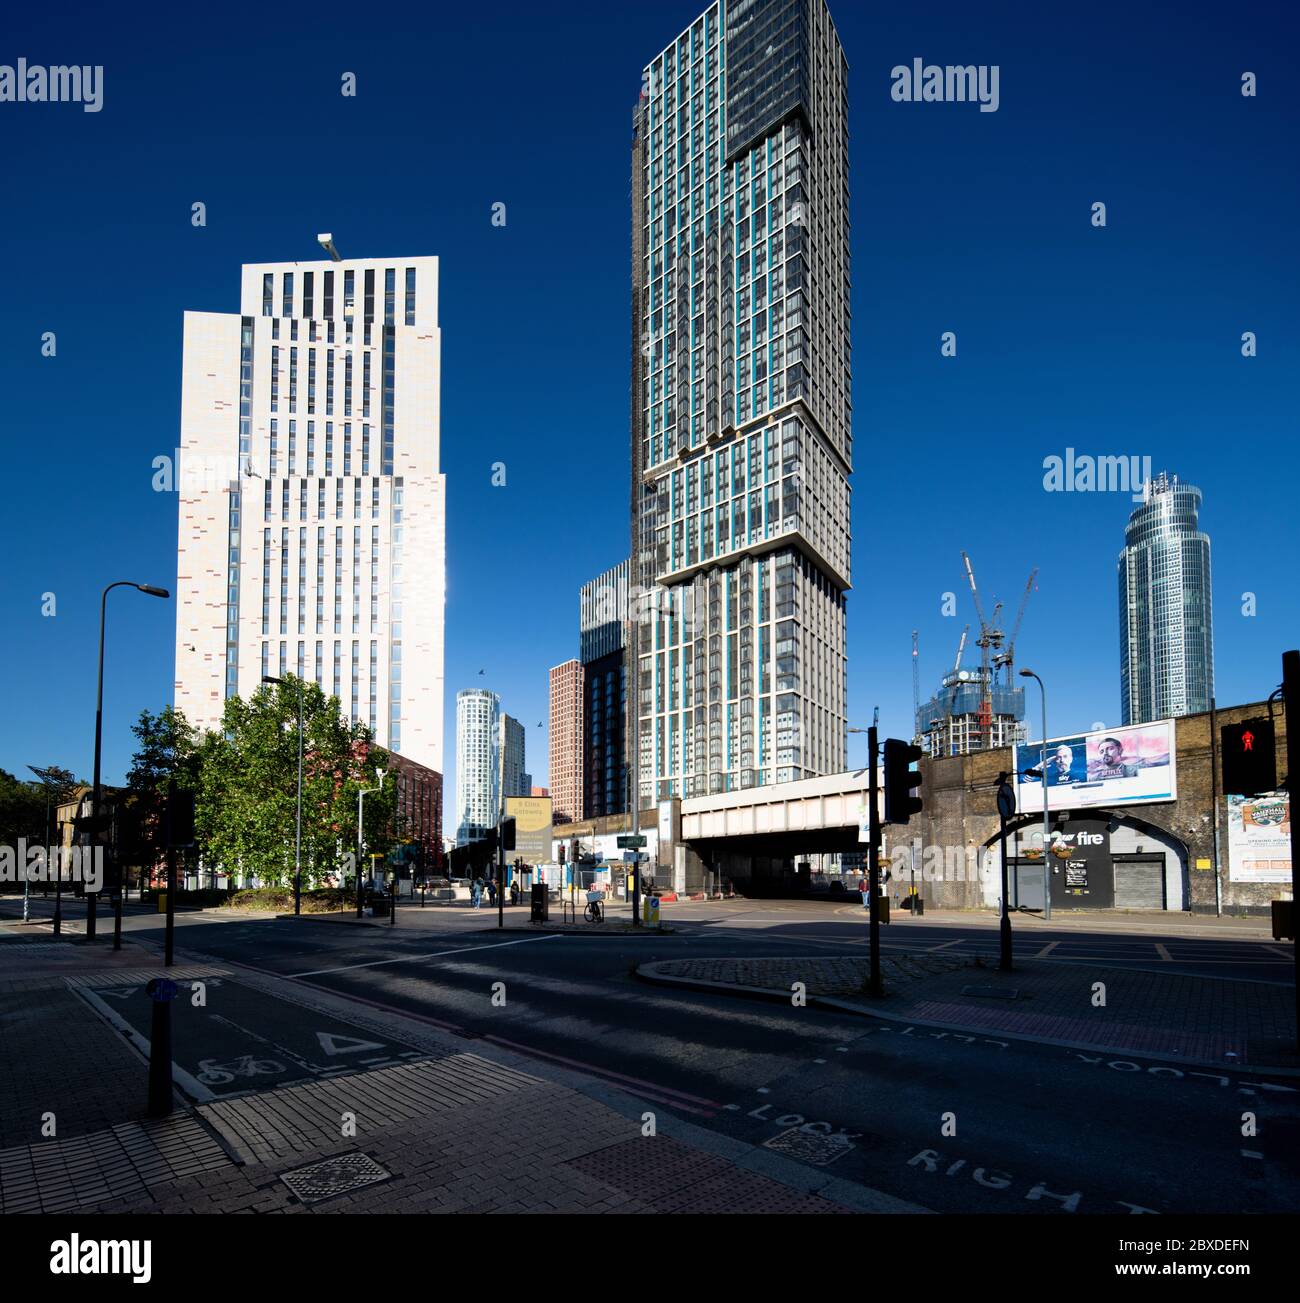 AYKON London One and Atlas building, Vauxhall Nine Elms Stock Photo - Alamy